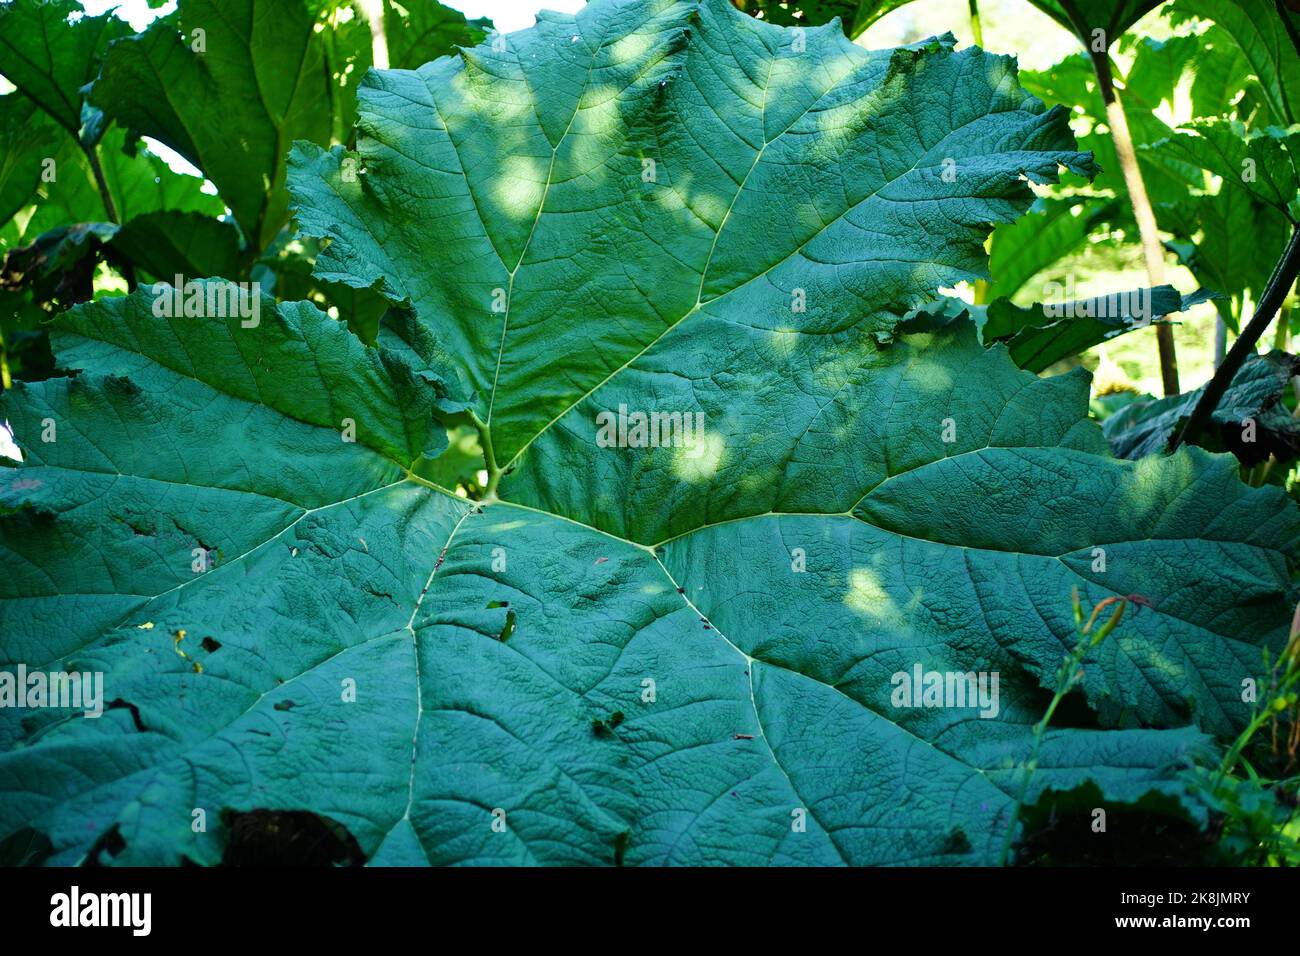 Giant leaves of the Gunnera Stock Photo